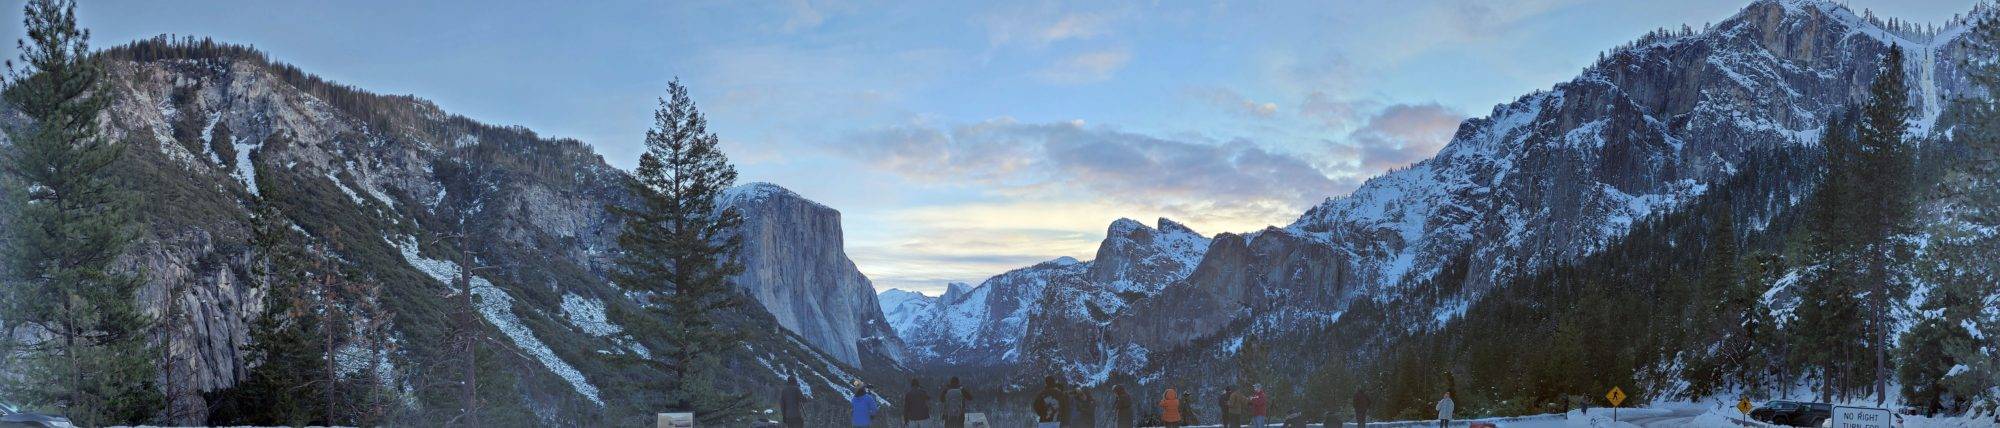 Yosemite at Dawn